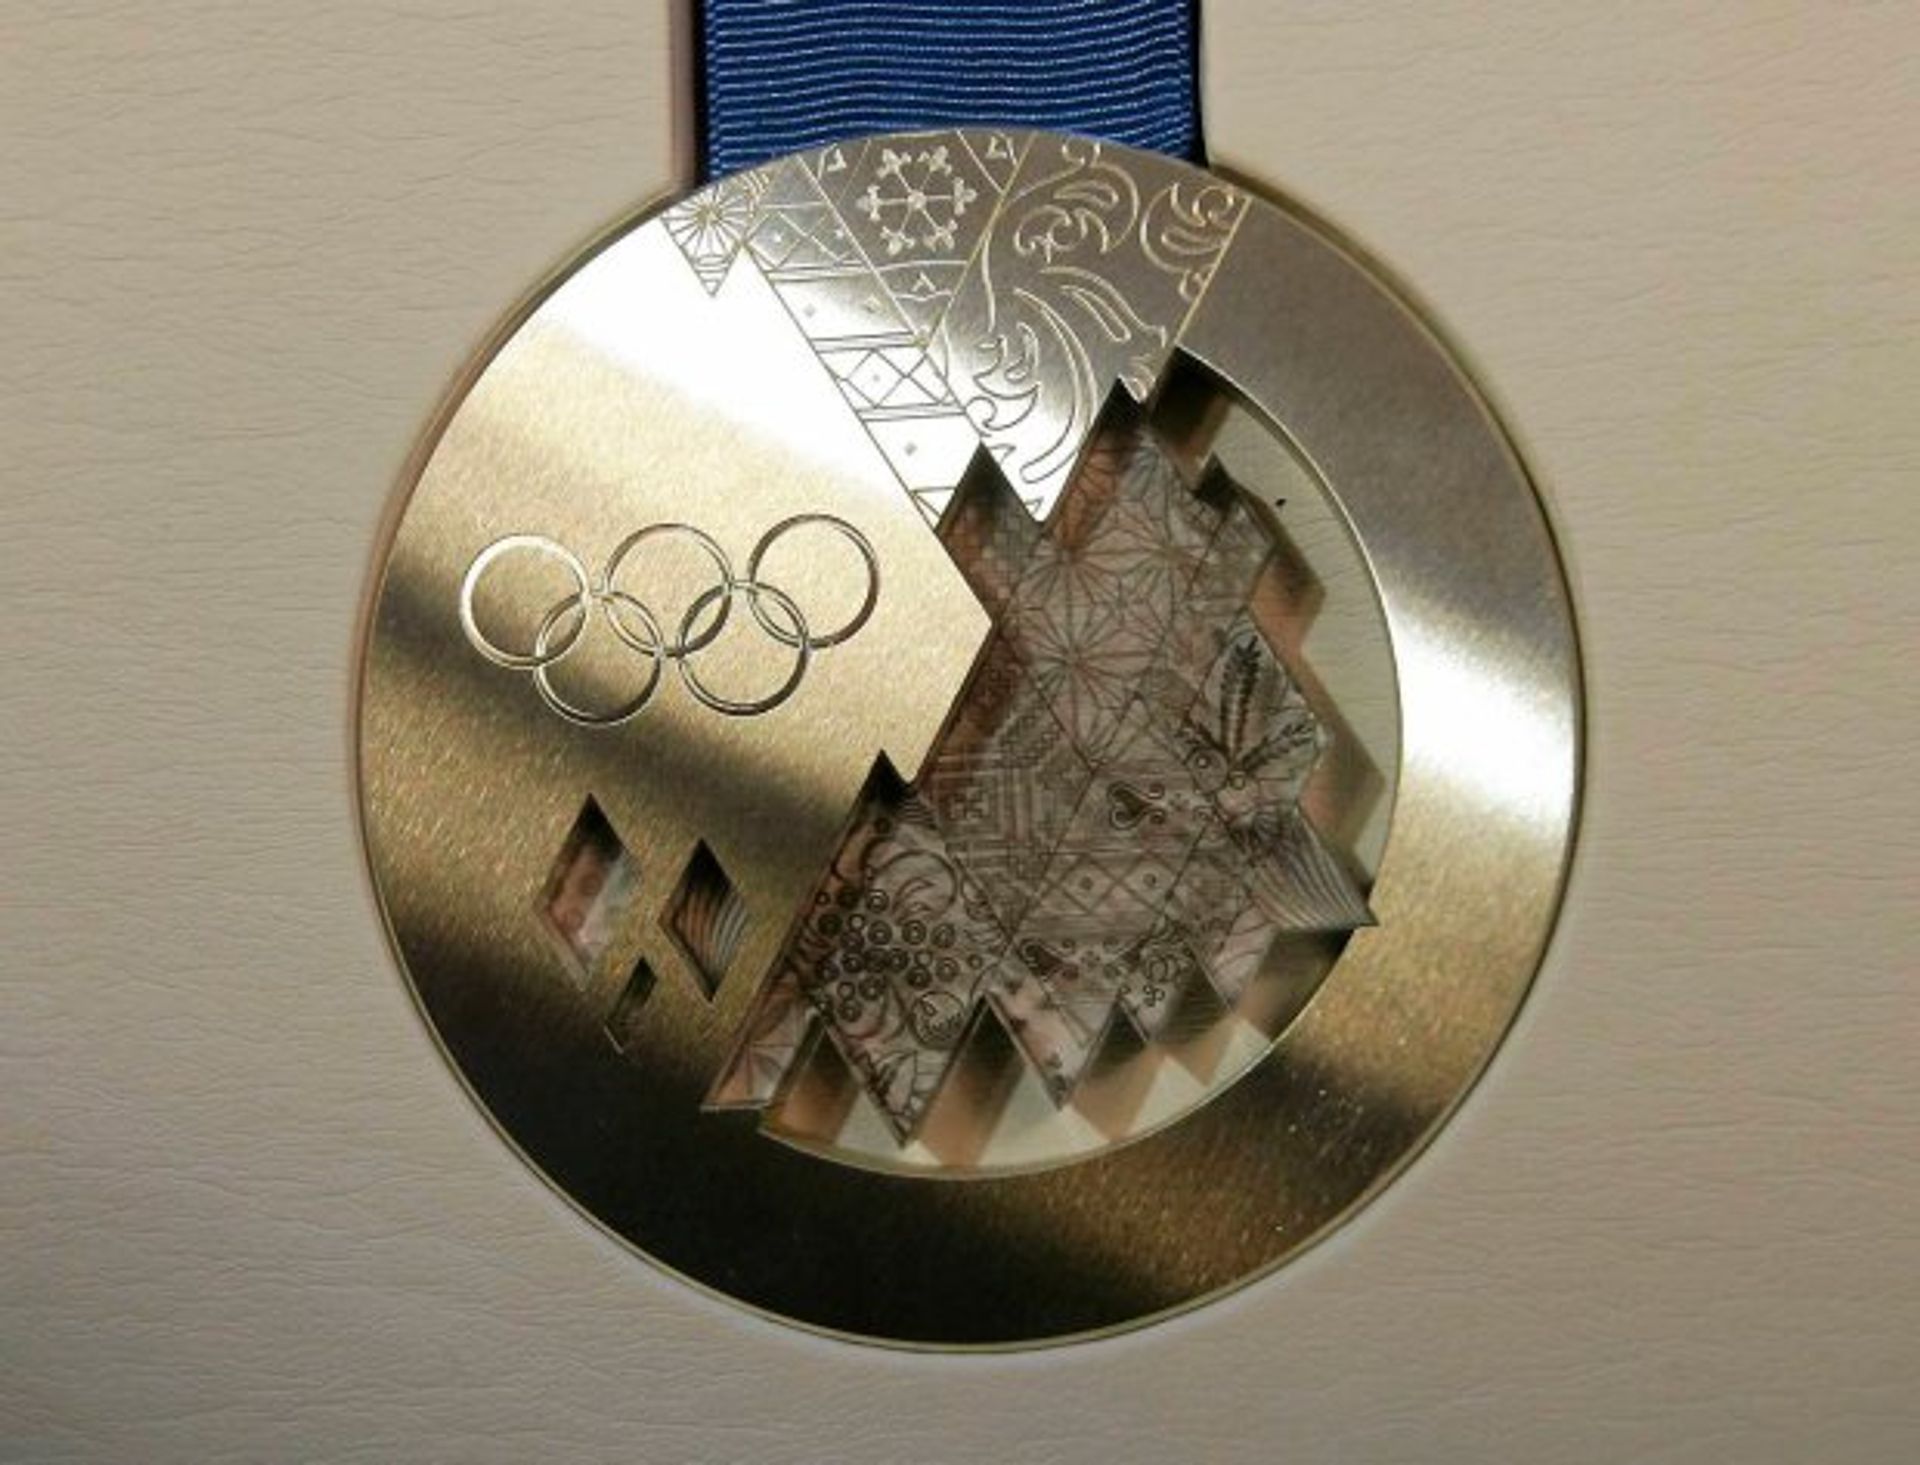  Mieszkanie za medal w Soczi?